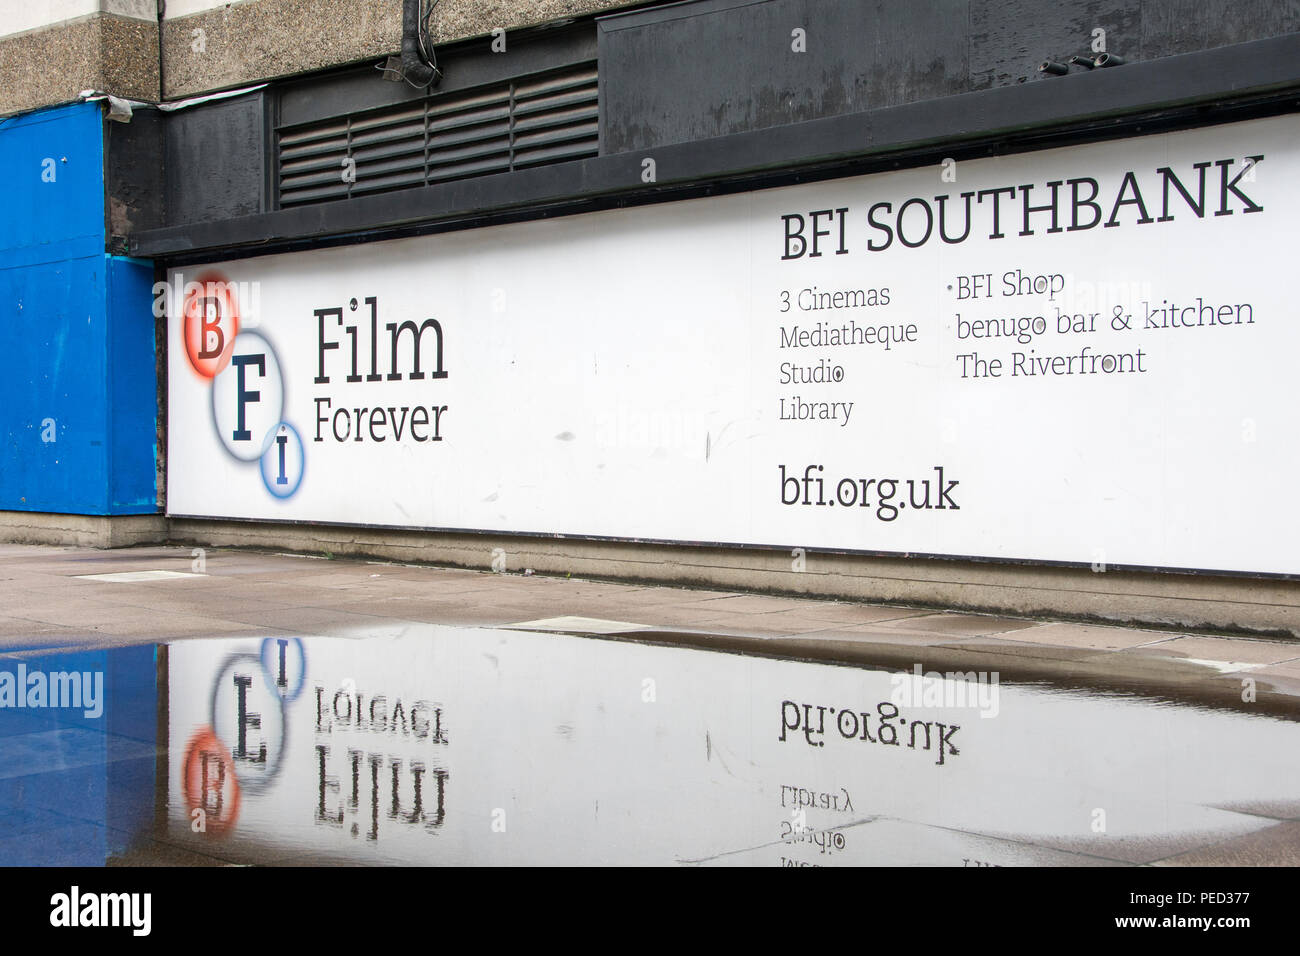 Anuncio de BFI Southbank de Londres, Reino Unido Foto de stock